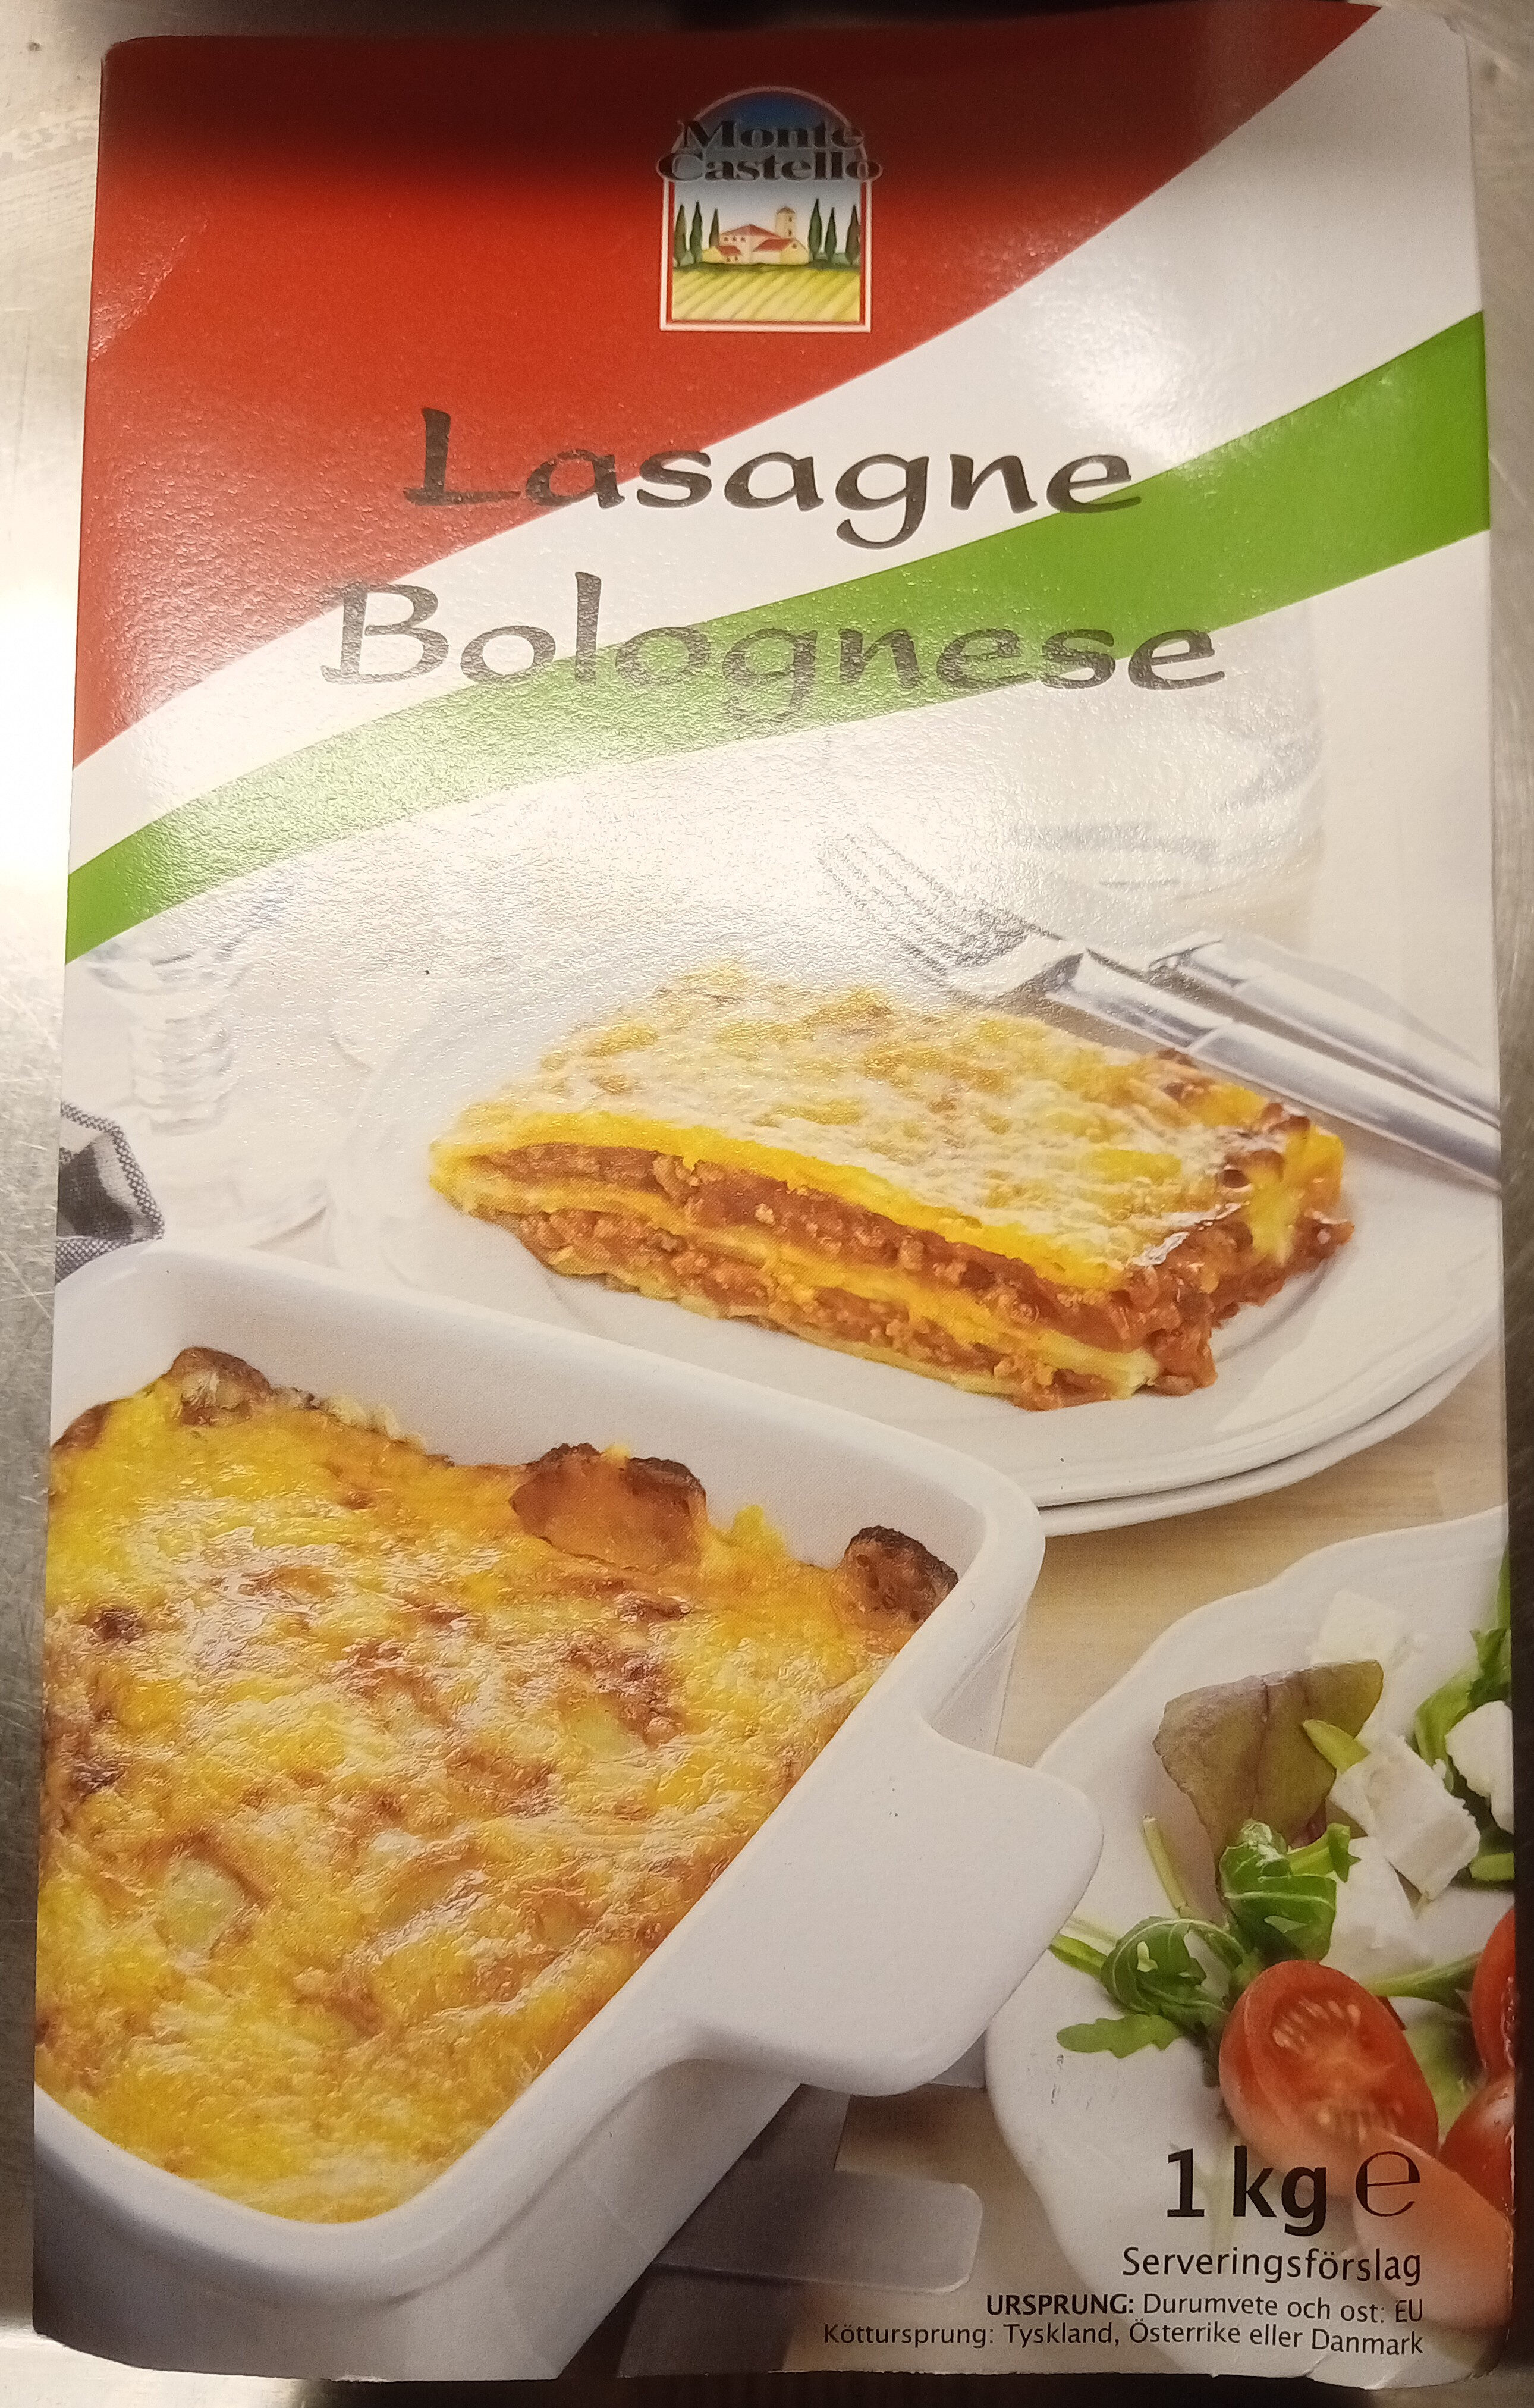 Monte Castello Lasagne Bolognese - Produkt - sv